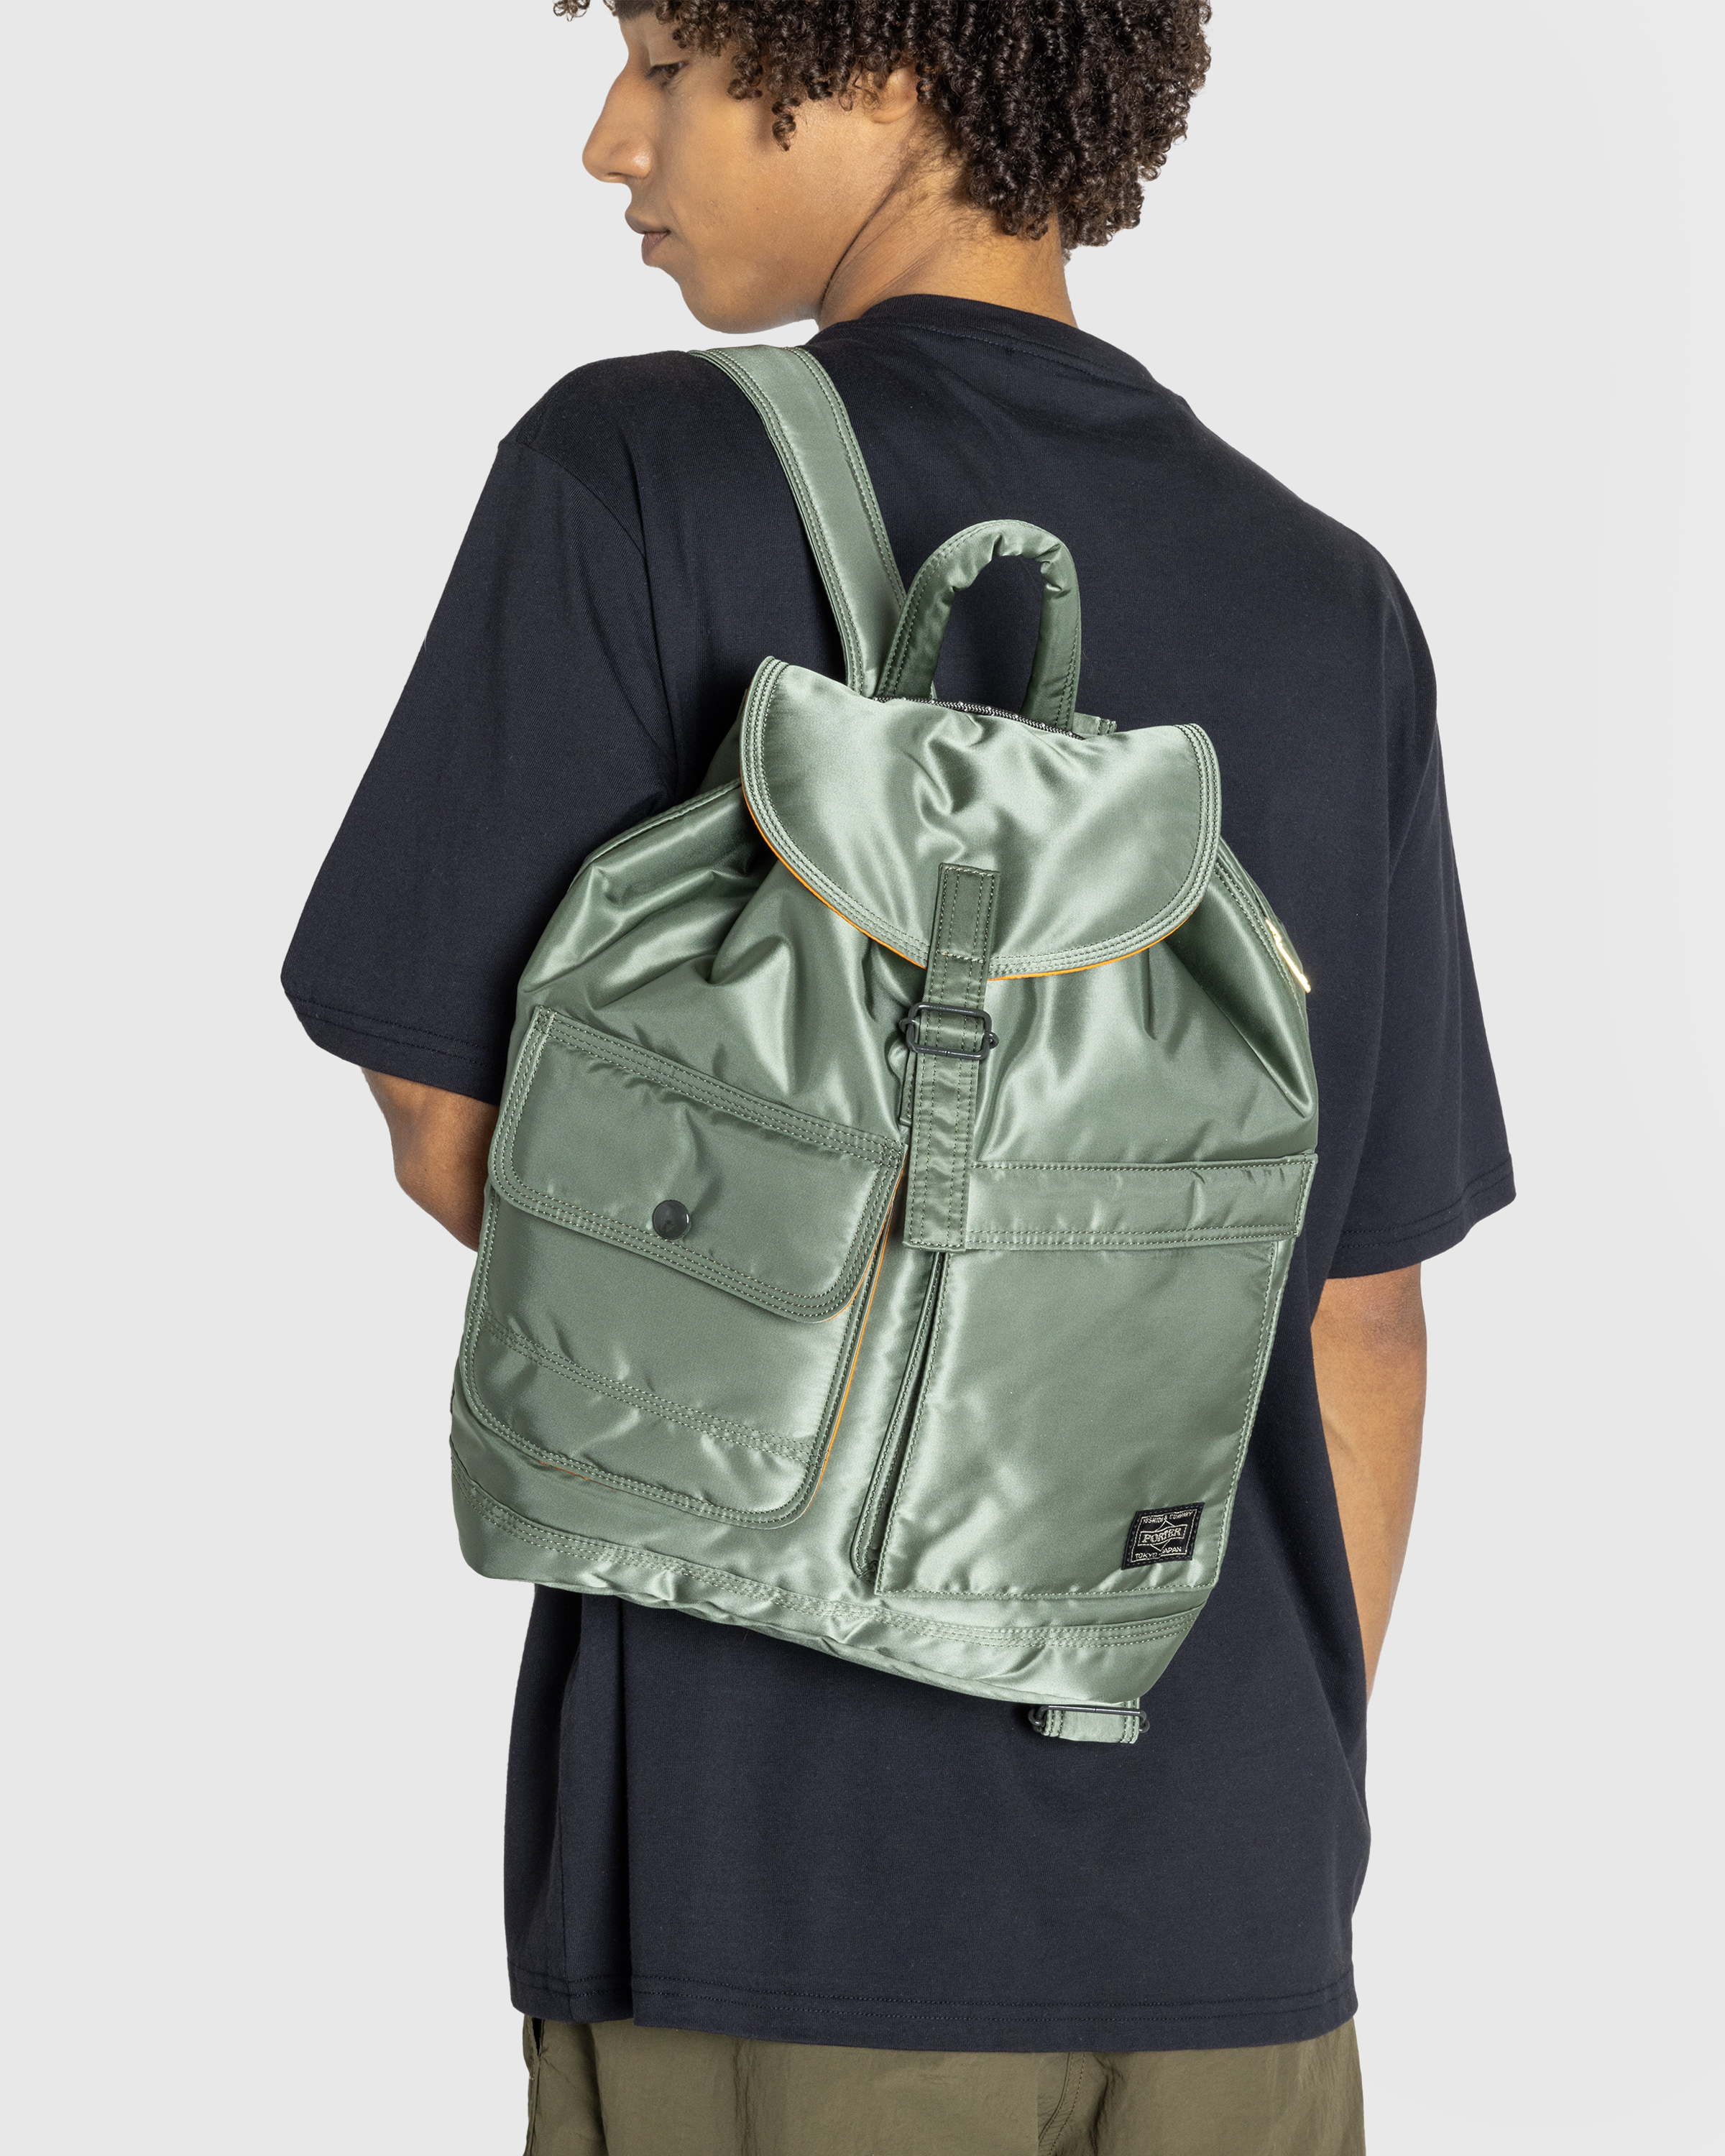 Porter-Yoshida & Co. – Tanker Backpack Sage Green - Backpacks - Green - Image 4